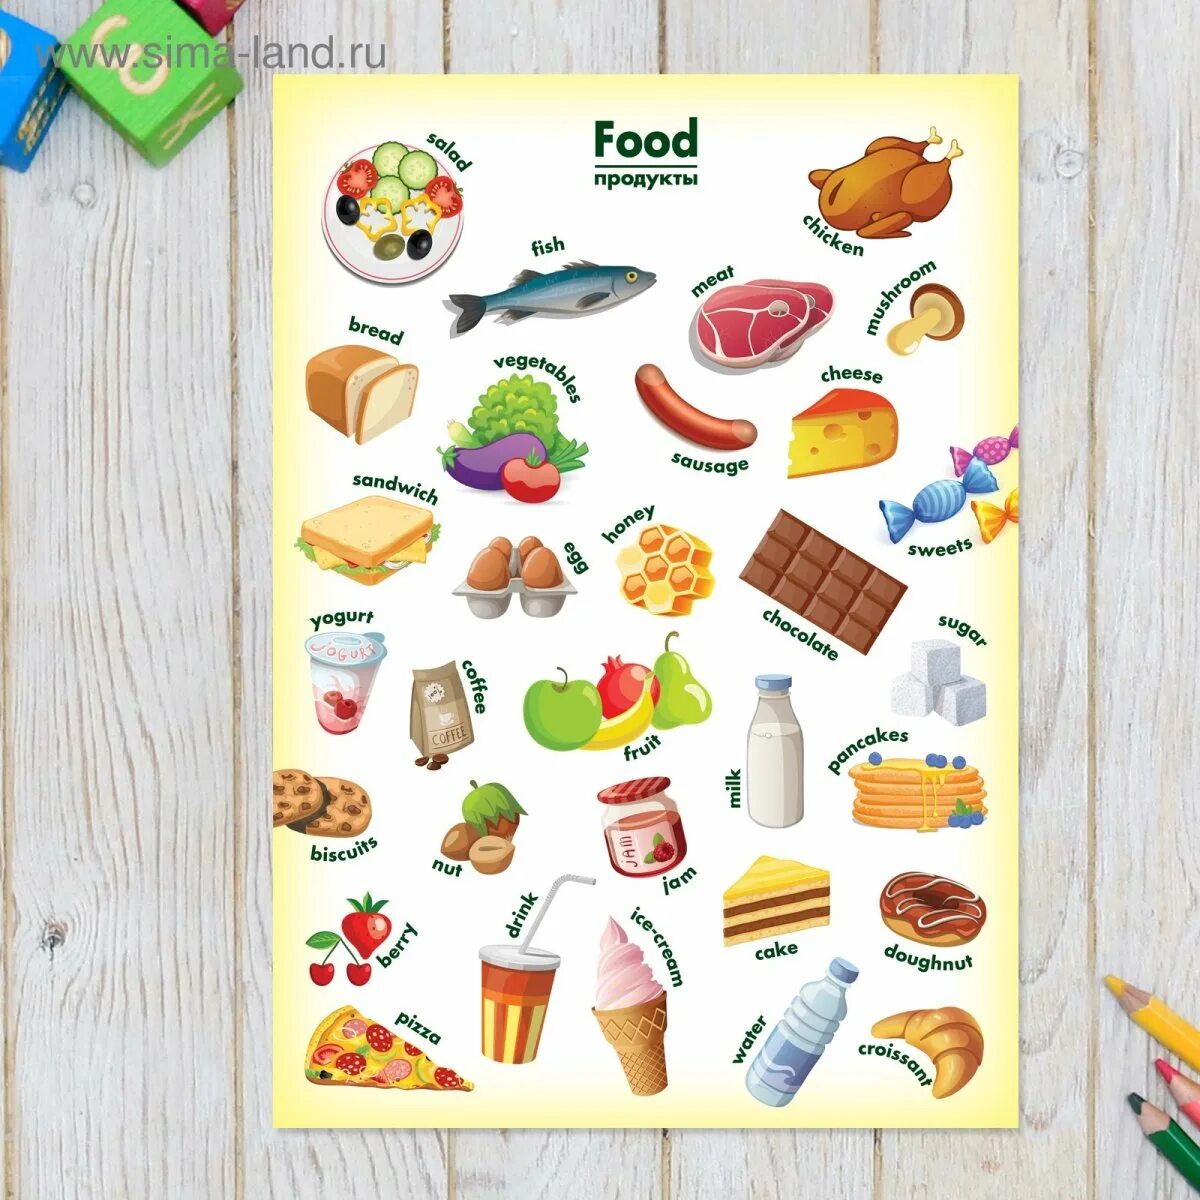 Карточки по теме еда. Карточки продуктов питания для детей. Продукты питания на английском. Карточки с продуктами на английском для детей. Еда на английском картинки